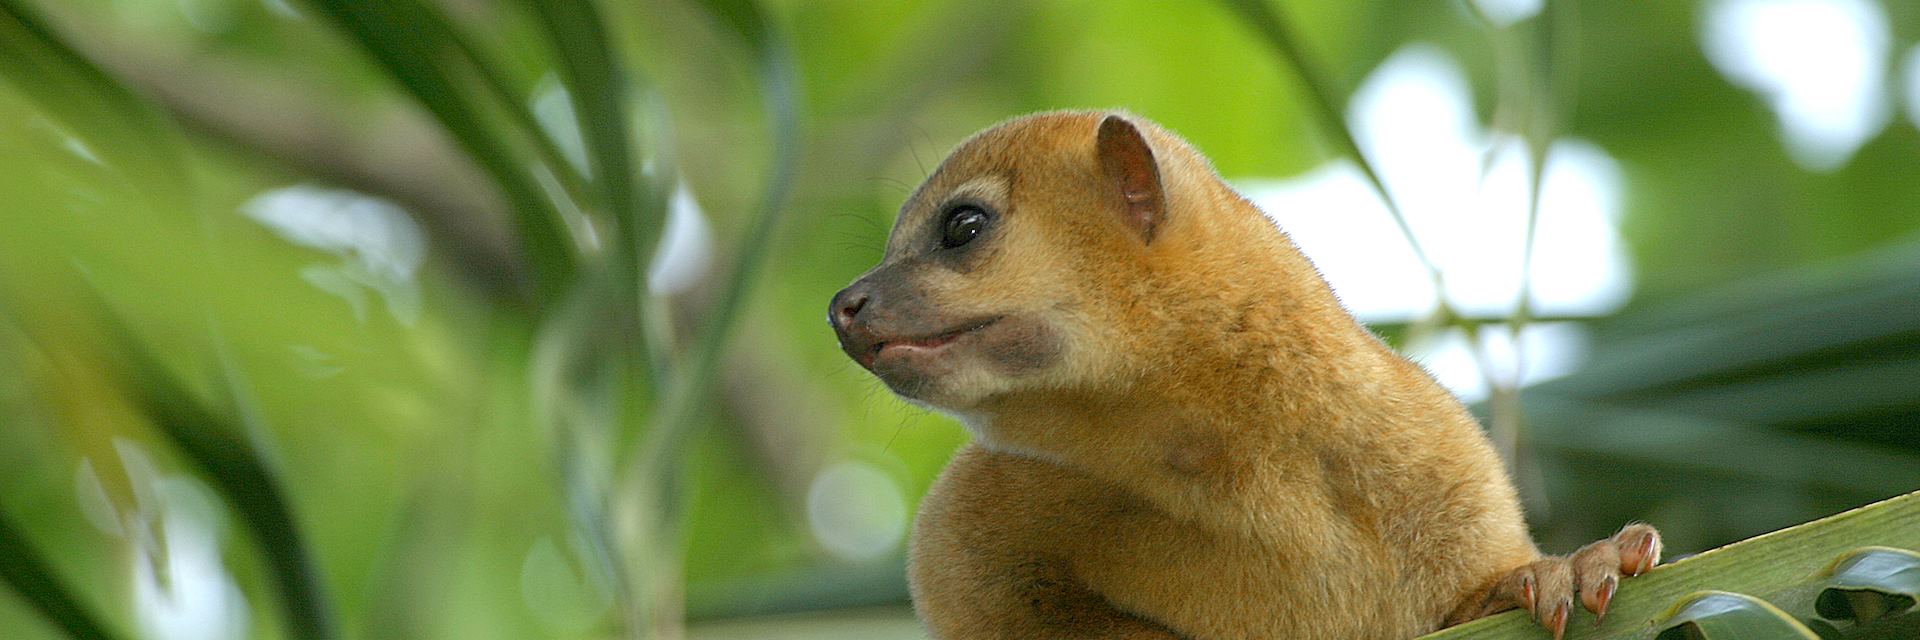 Honey bear, Belize